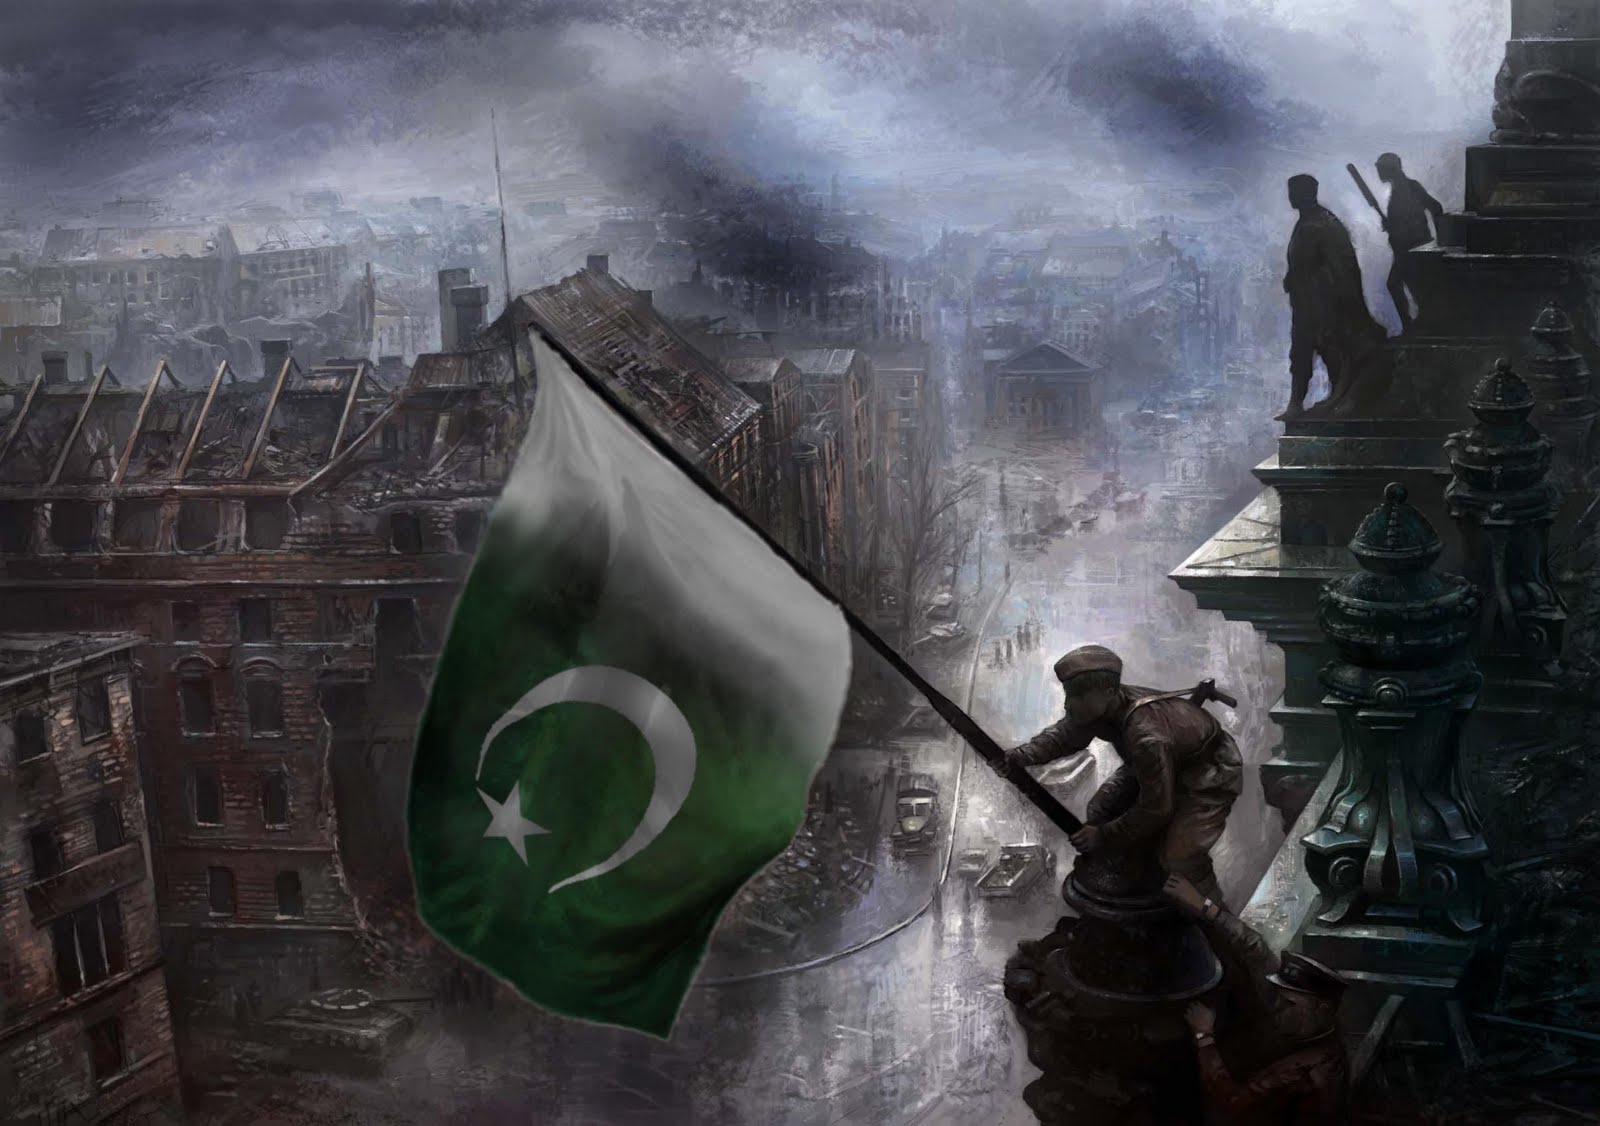 Pakistan National Flag Wallpapers